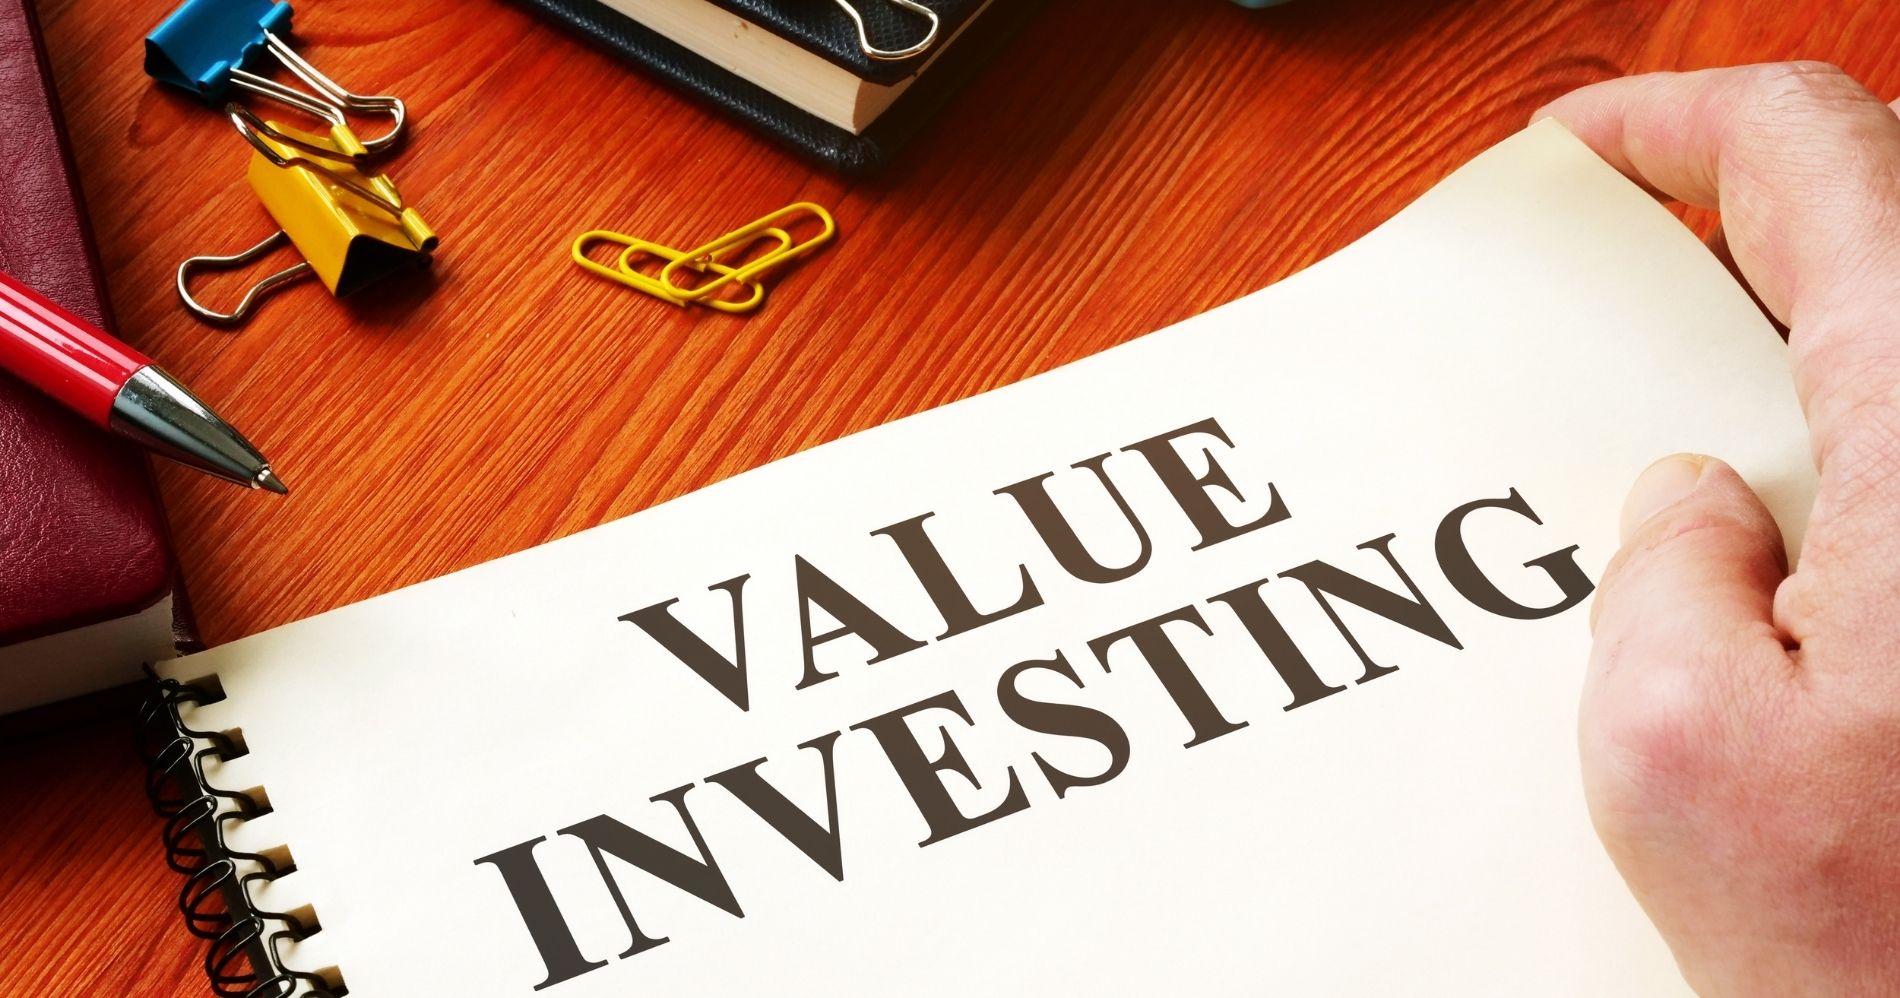 Pentingnya Intrinsic Value dalam Strategi Value Investing Illustration Bisnis Muda - Image: Canva